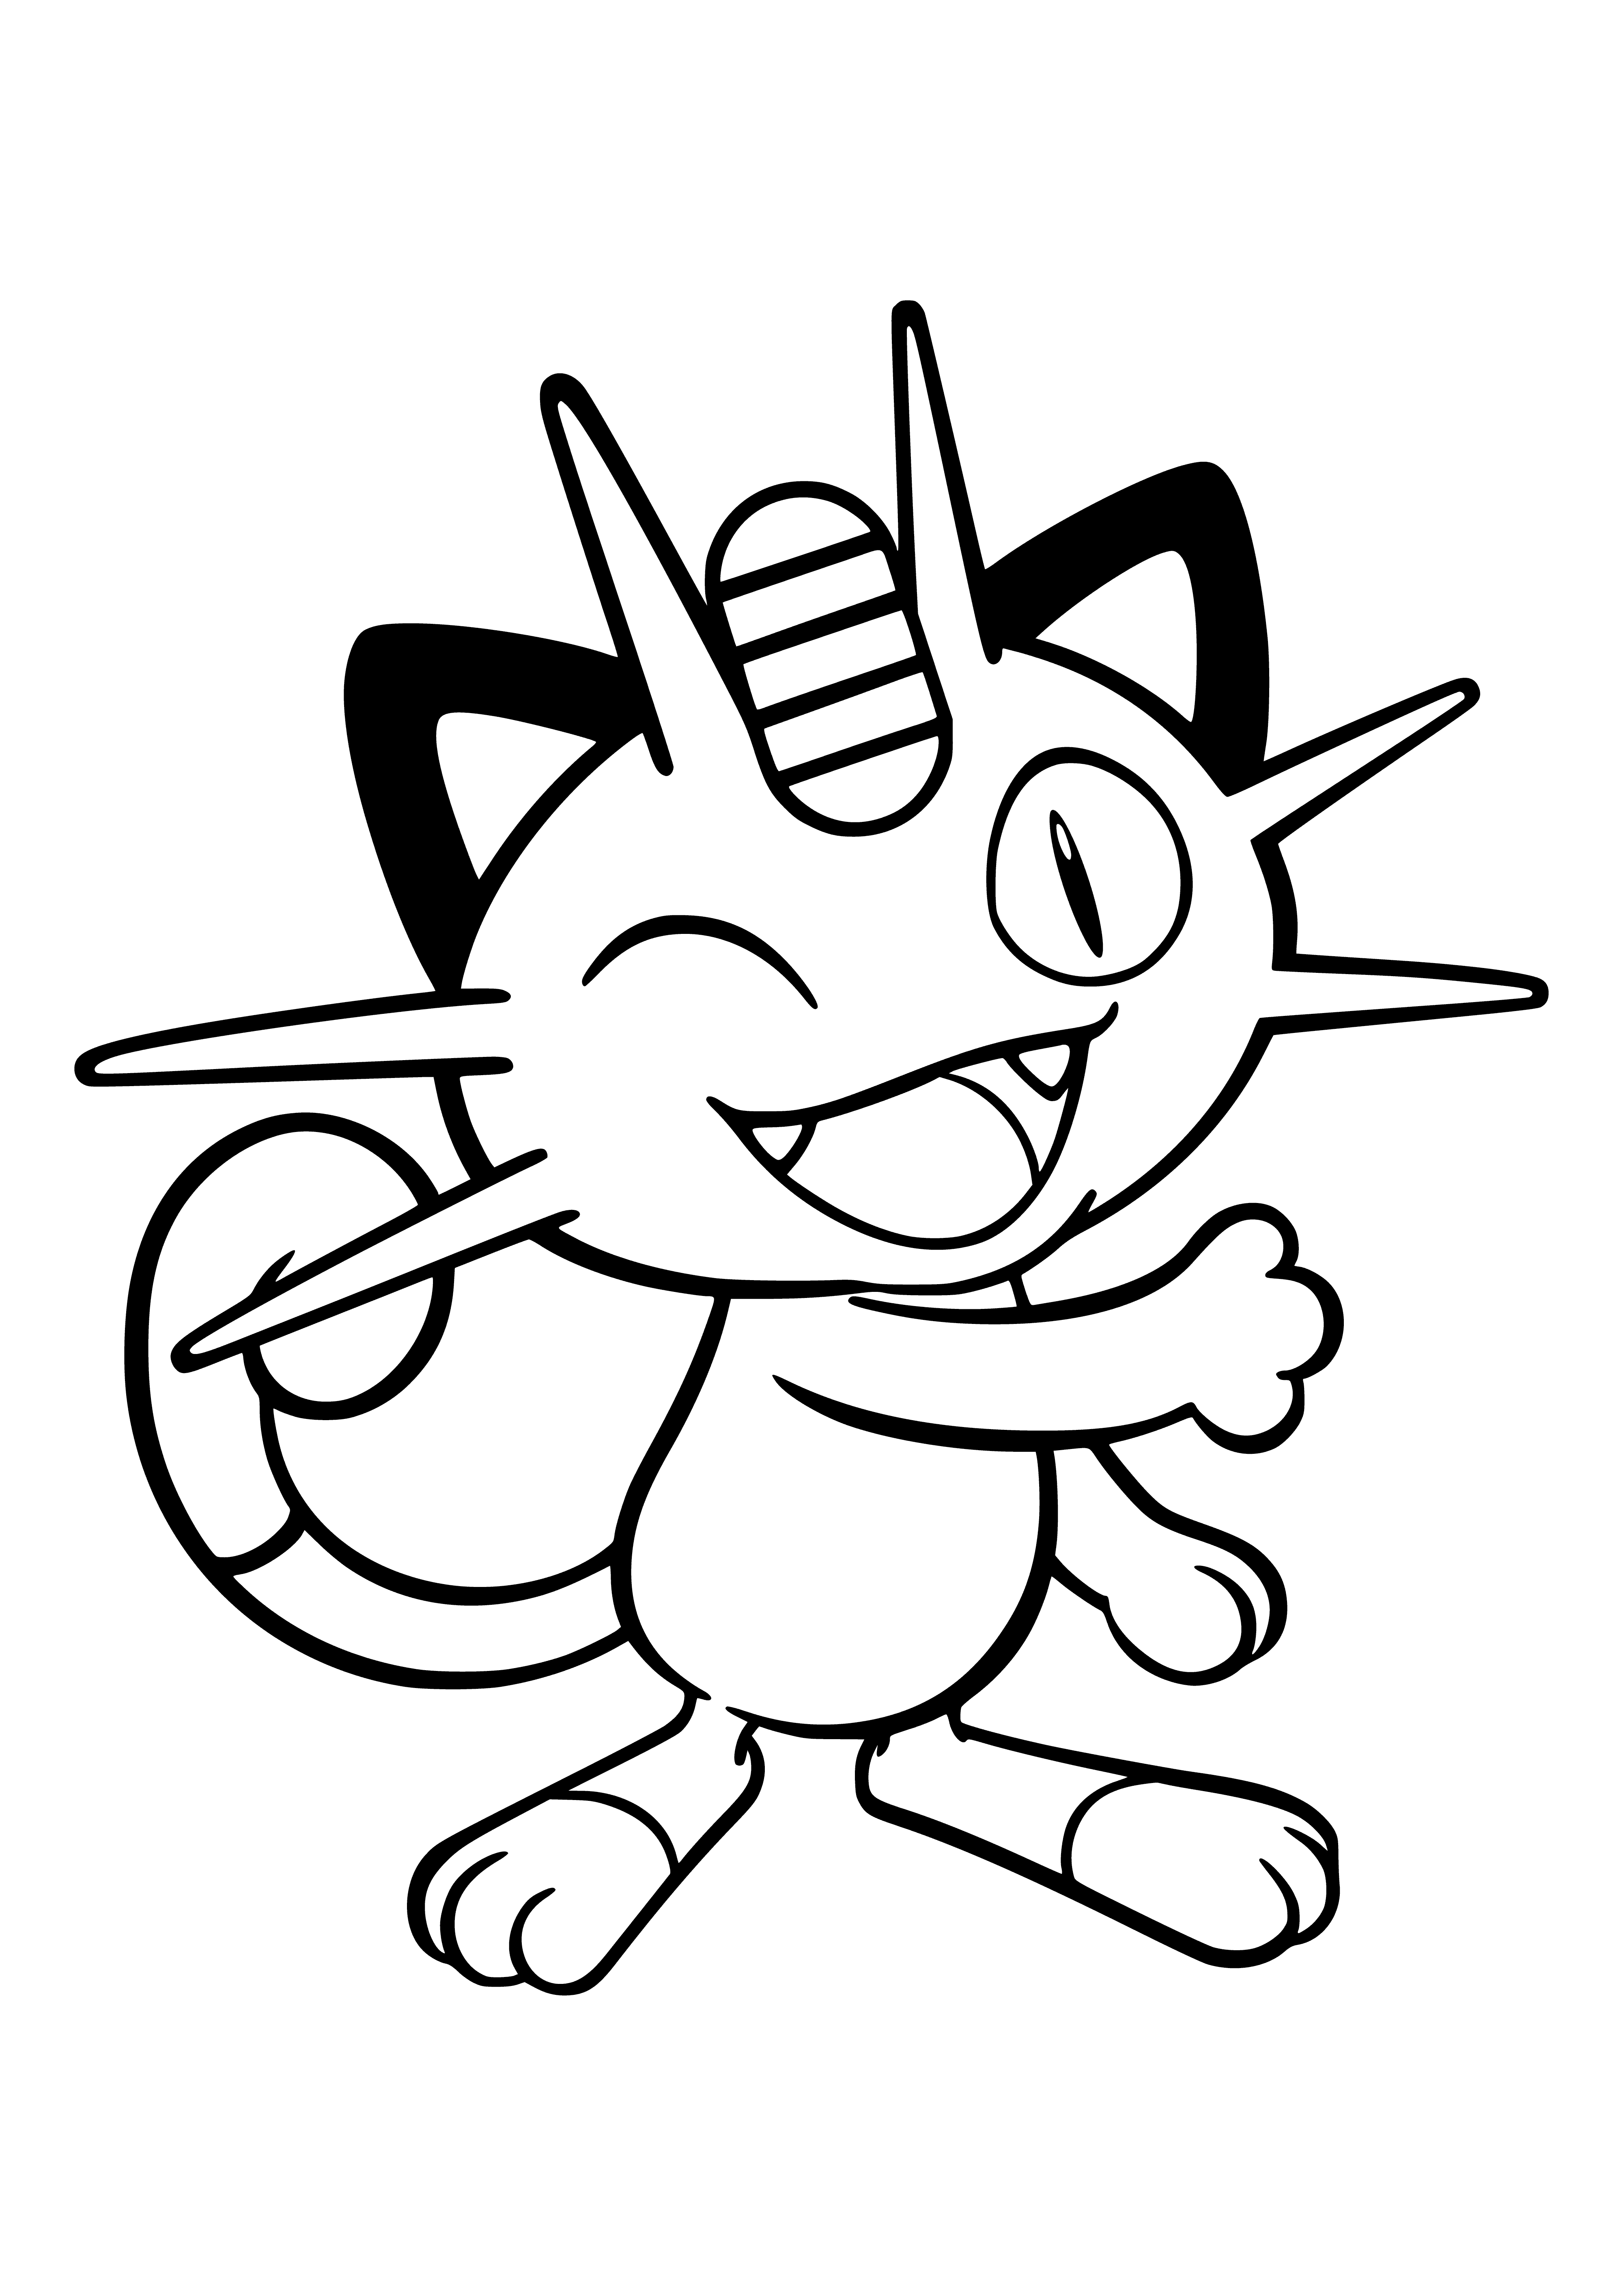 Pokemon Meowth coloring page